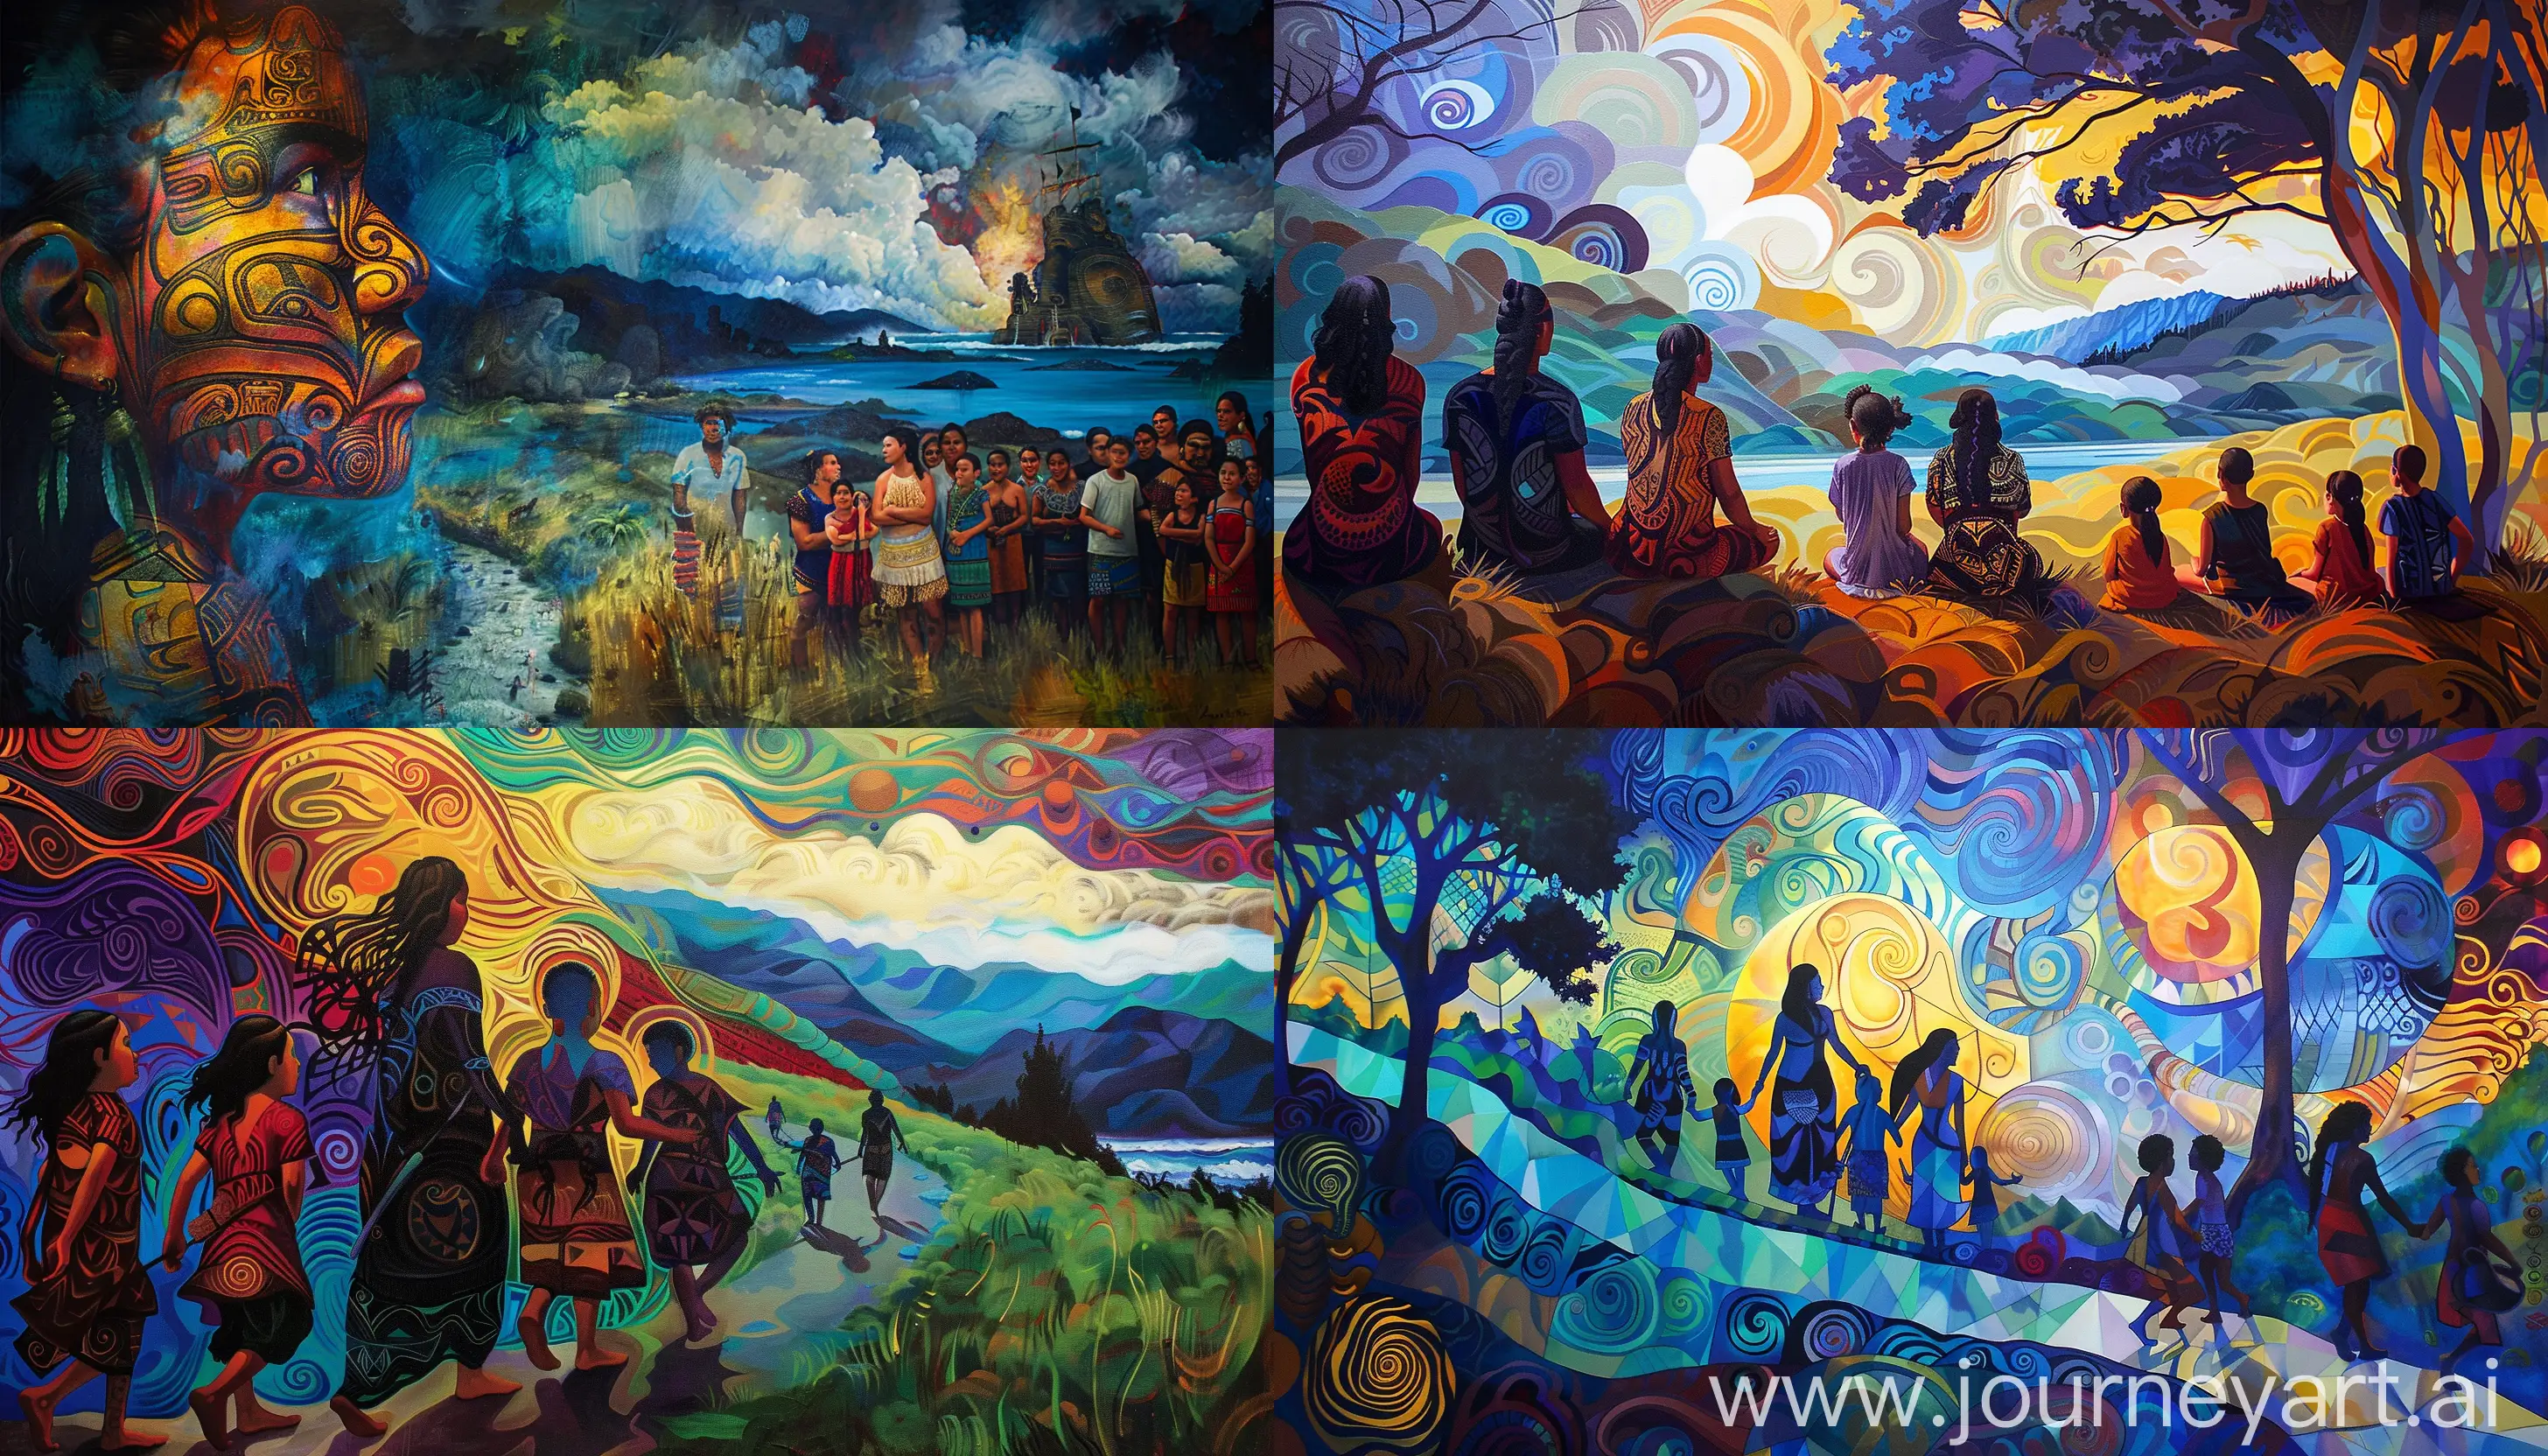 Aotearoa-Maori-Migration-Warrior-Women-and-Children-in-AwardWinning-Contemporary-Painting